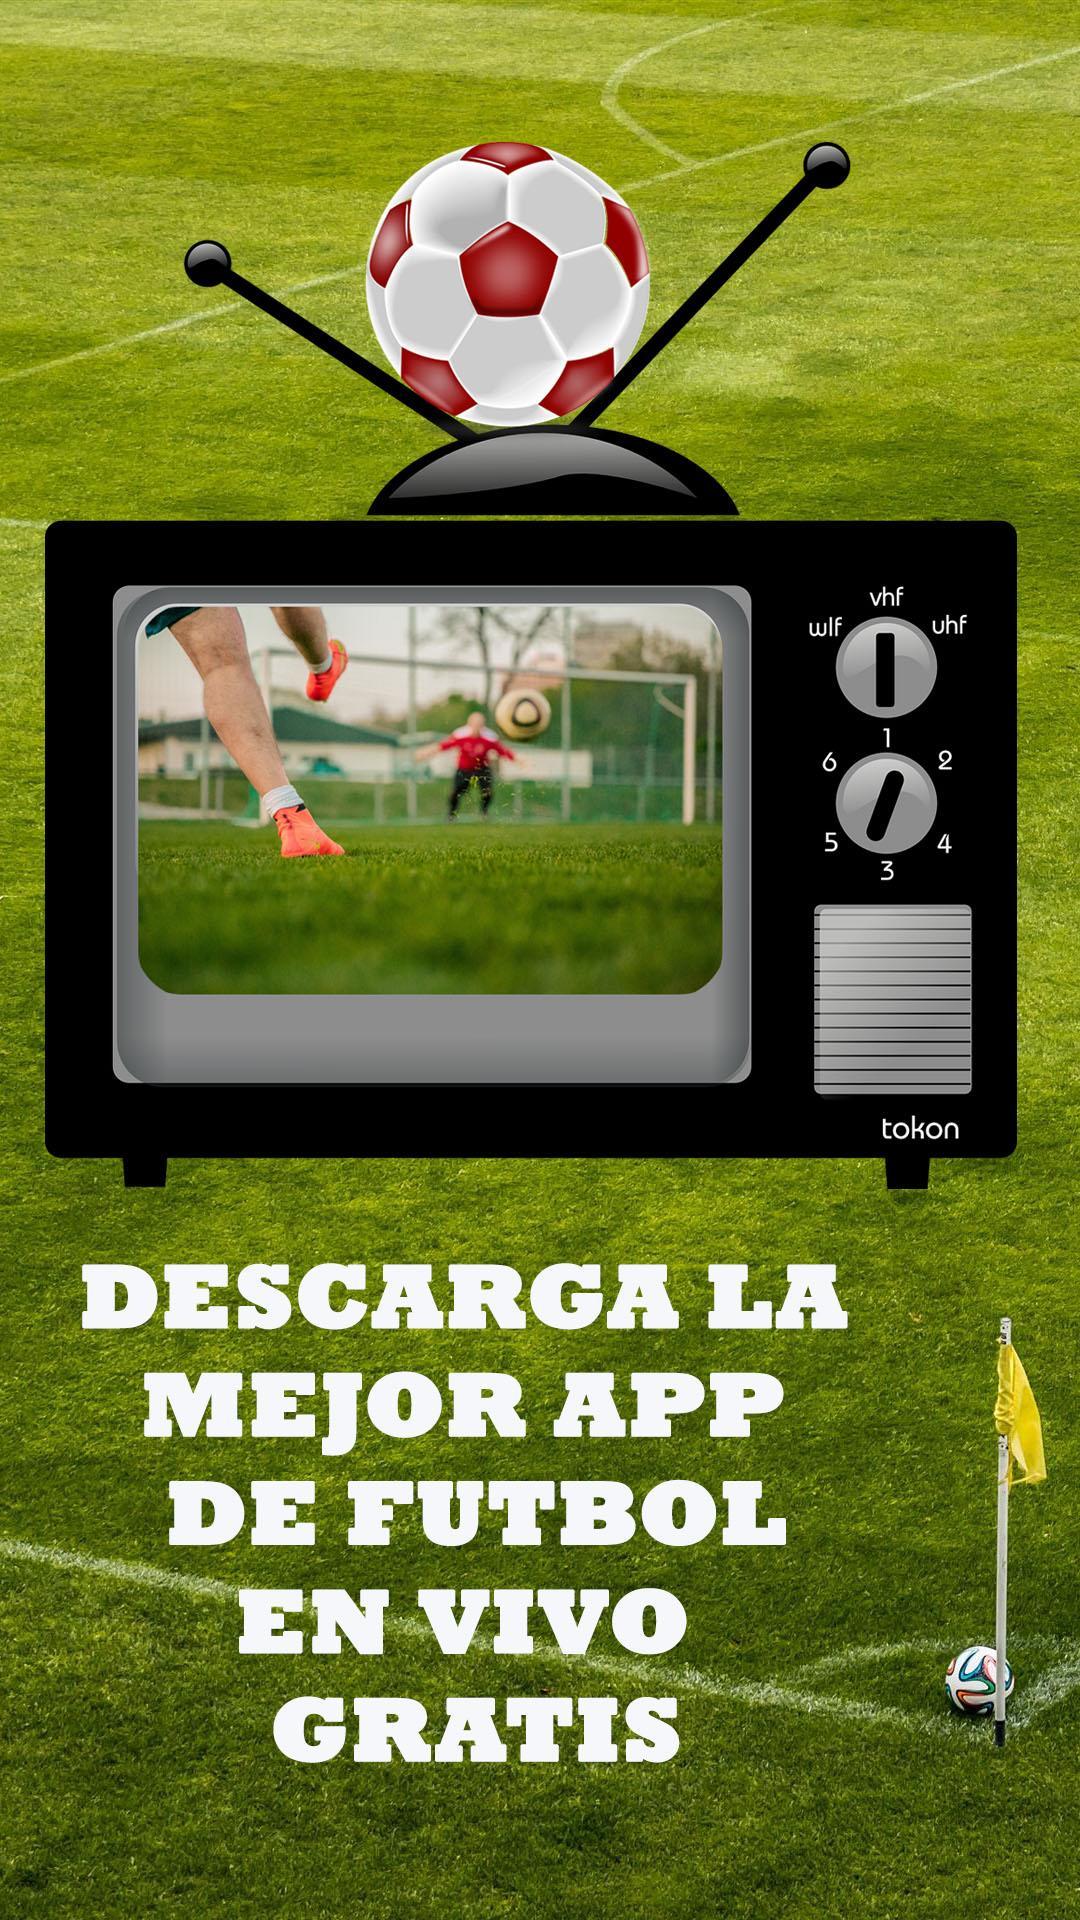 TV fútbol en VIVO Gratis - TV CABLE Guide APK for Android Download